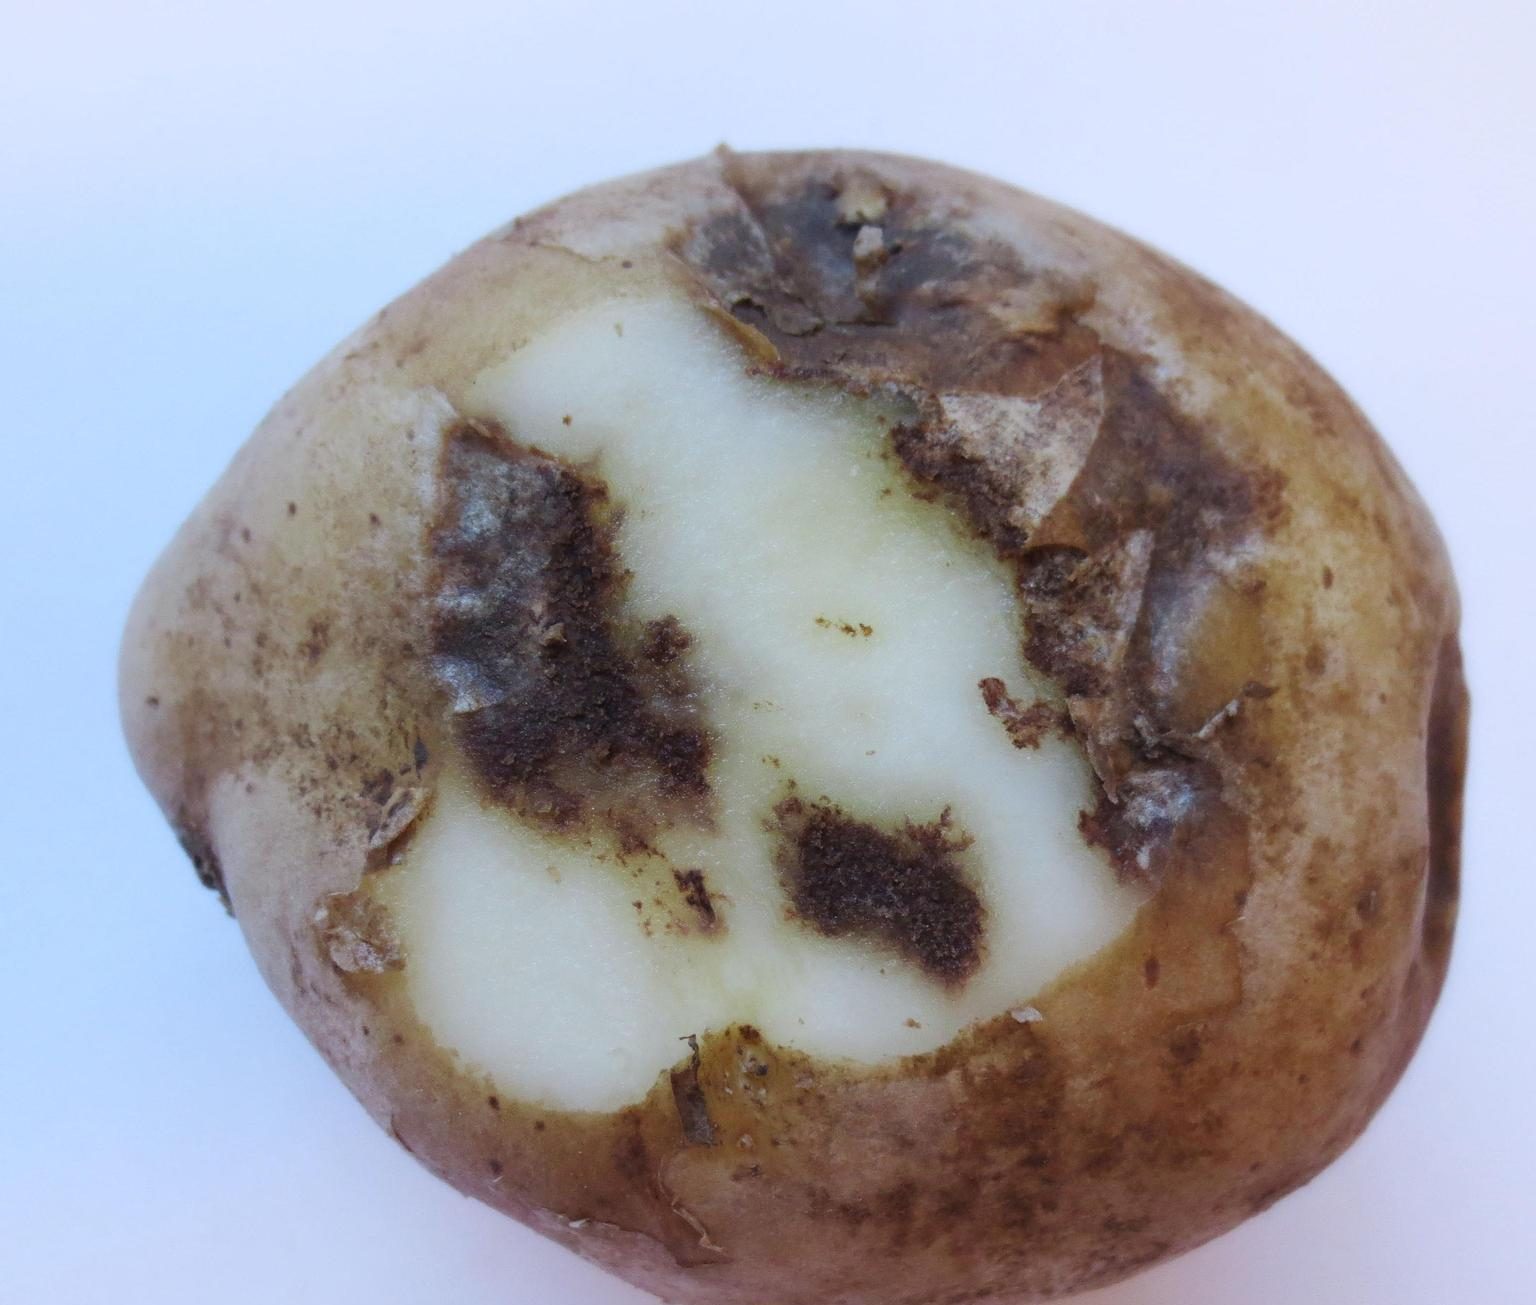 Potato inside